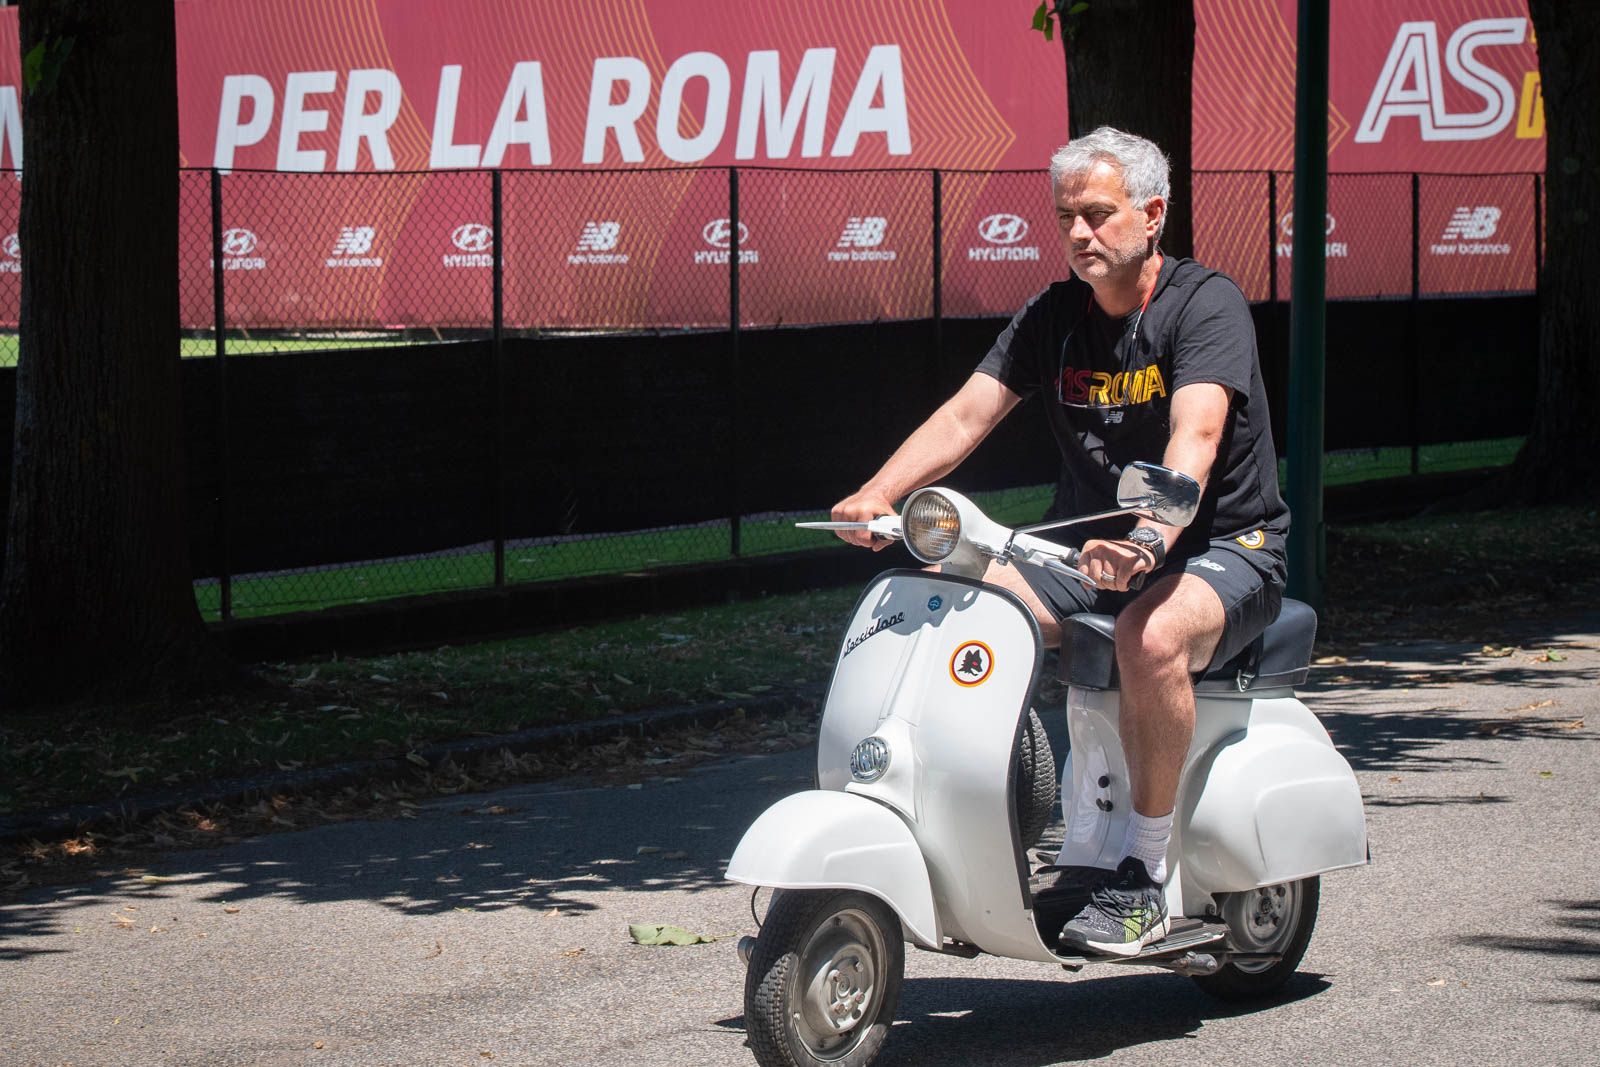 Potret Jose Mourinho naik vespa, sama seperti yang digambarkan penggemar dalam mural mereka di kota Roma